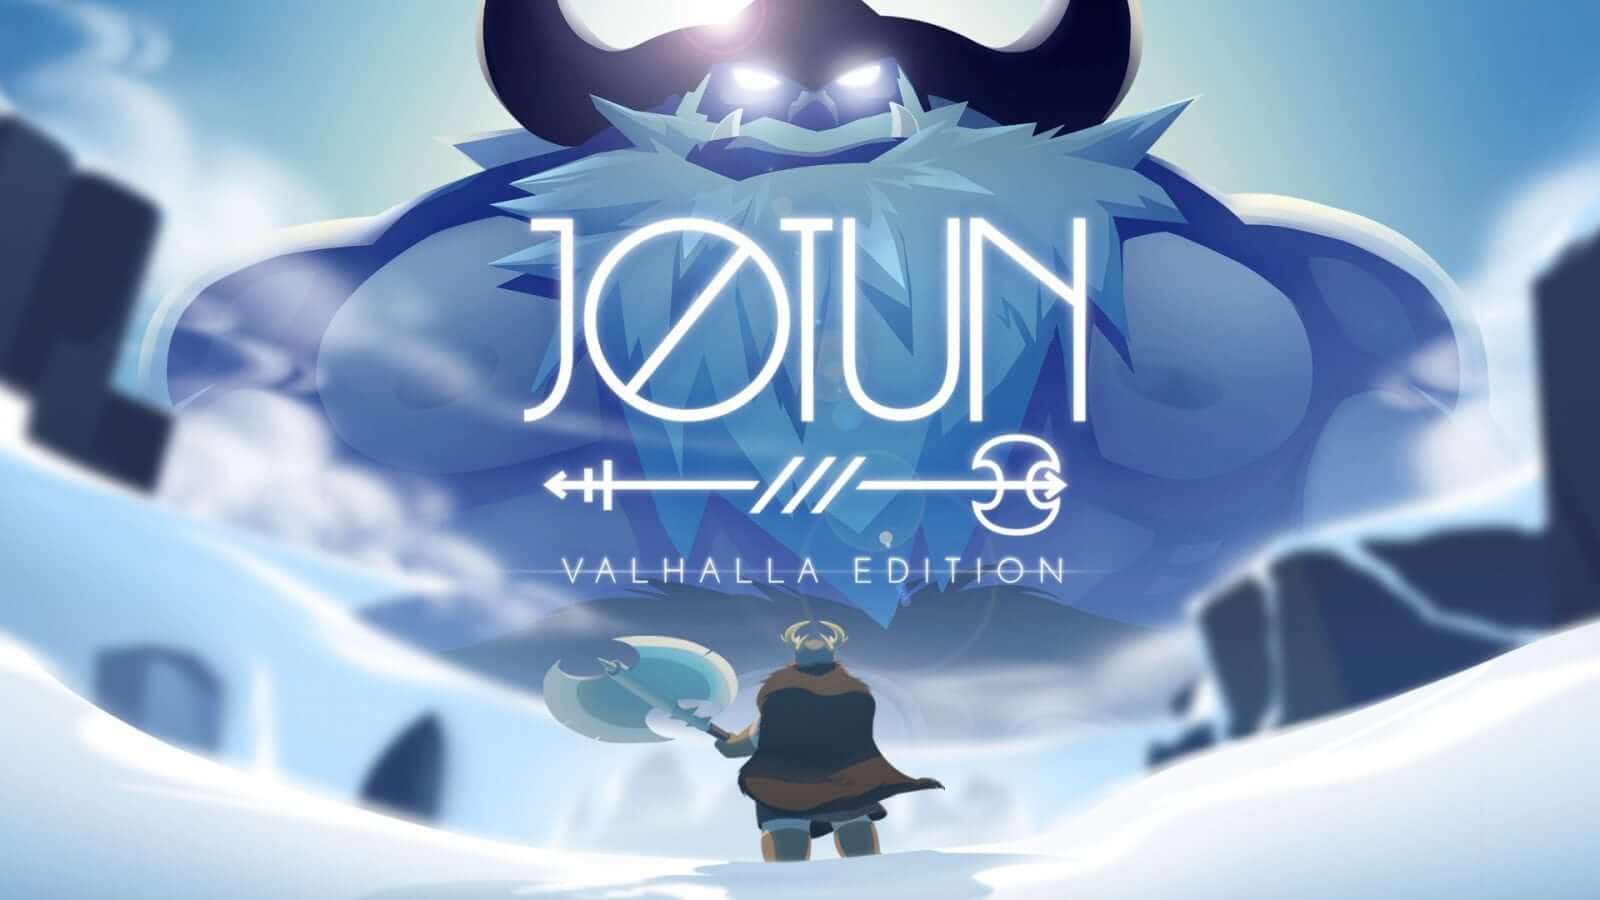 Jotun Valhalla Edition Game Analise